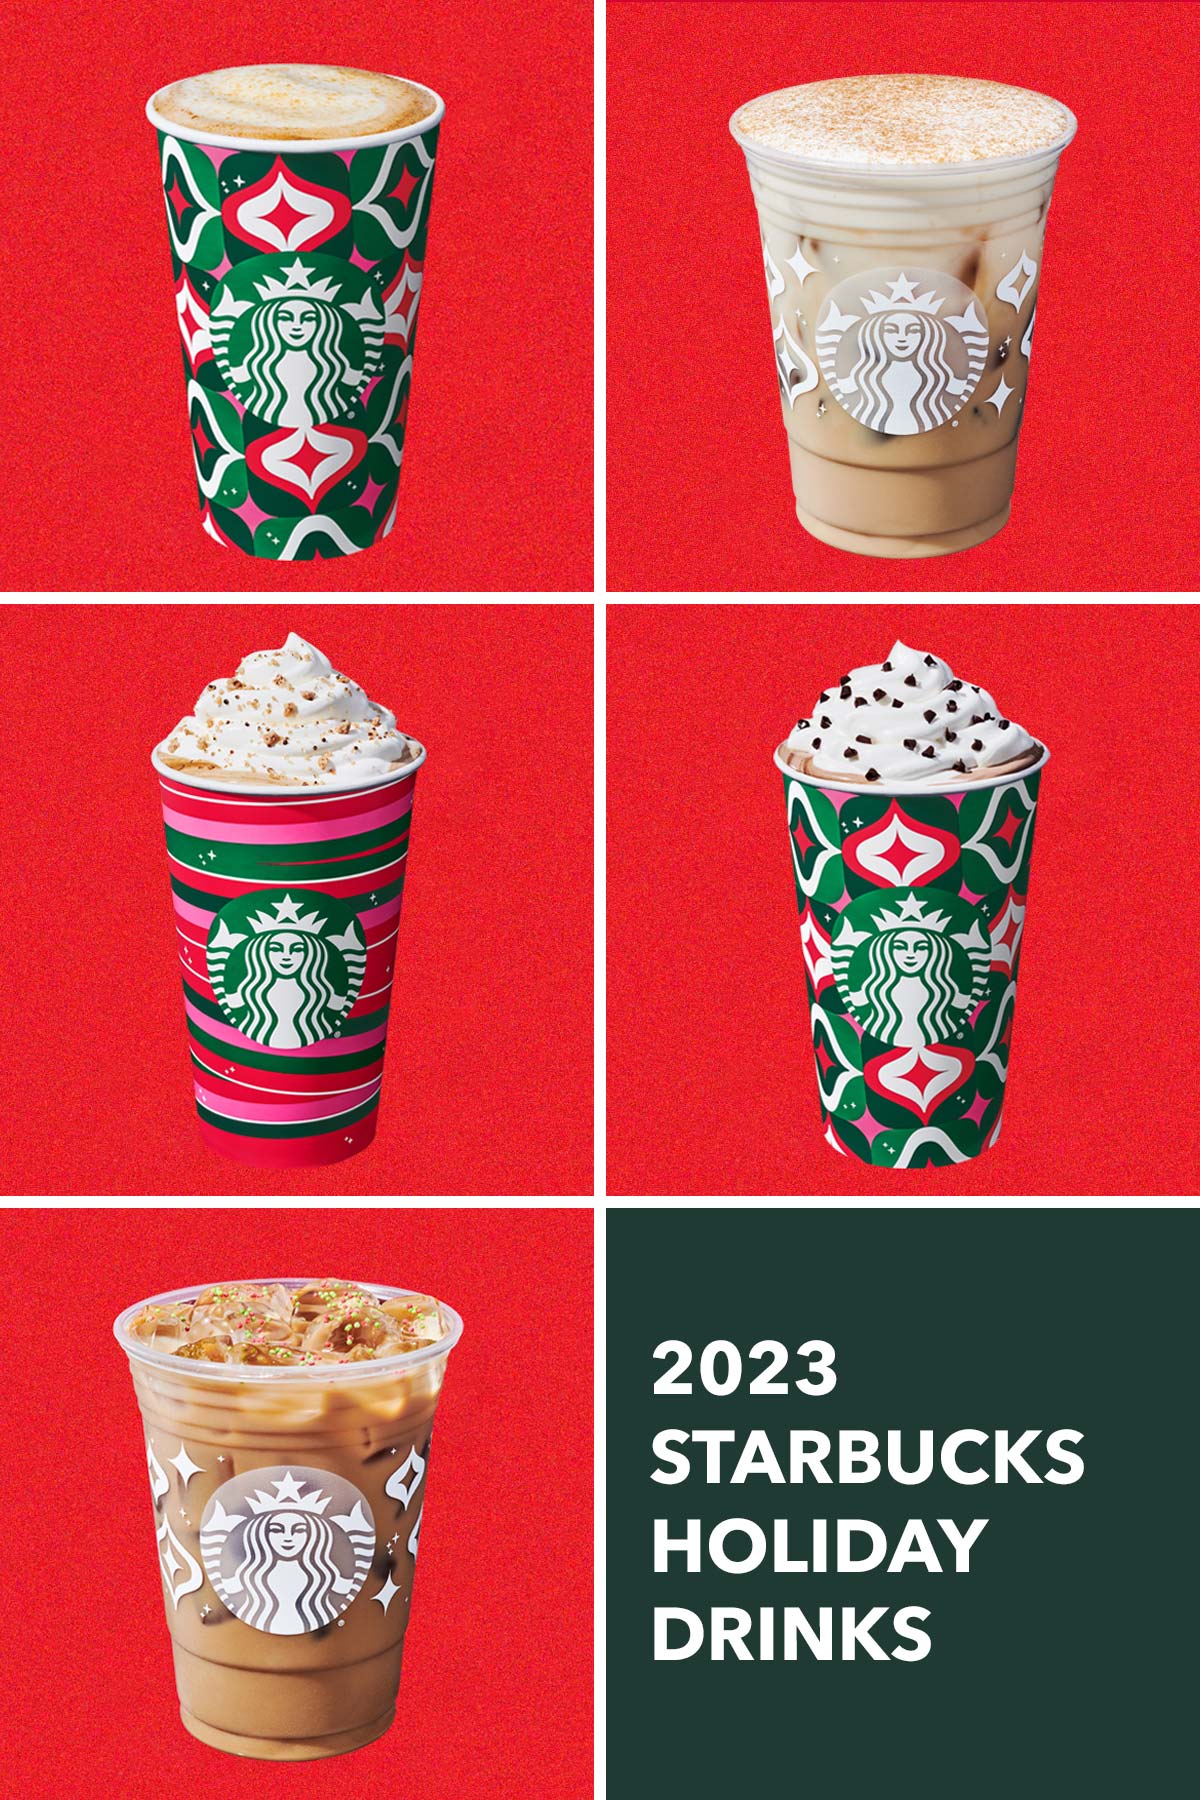 Starbucks 2023 holiday drinks.